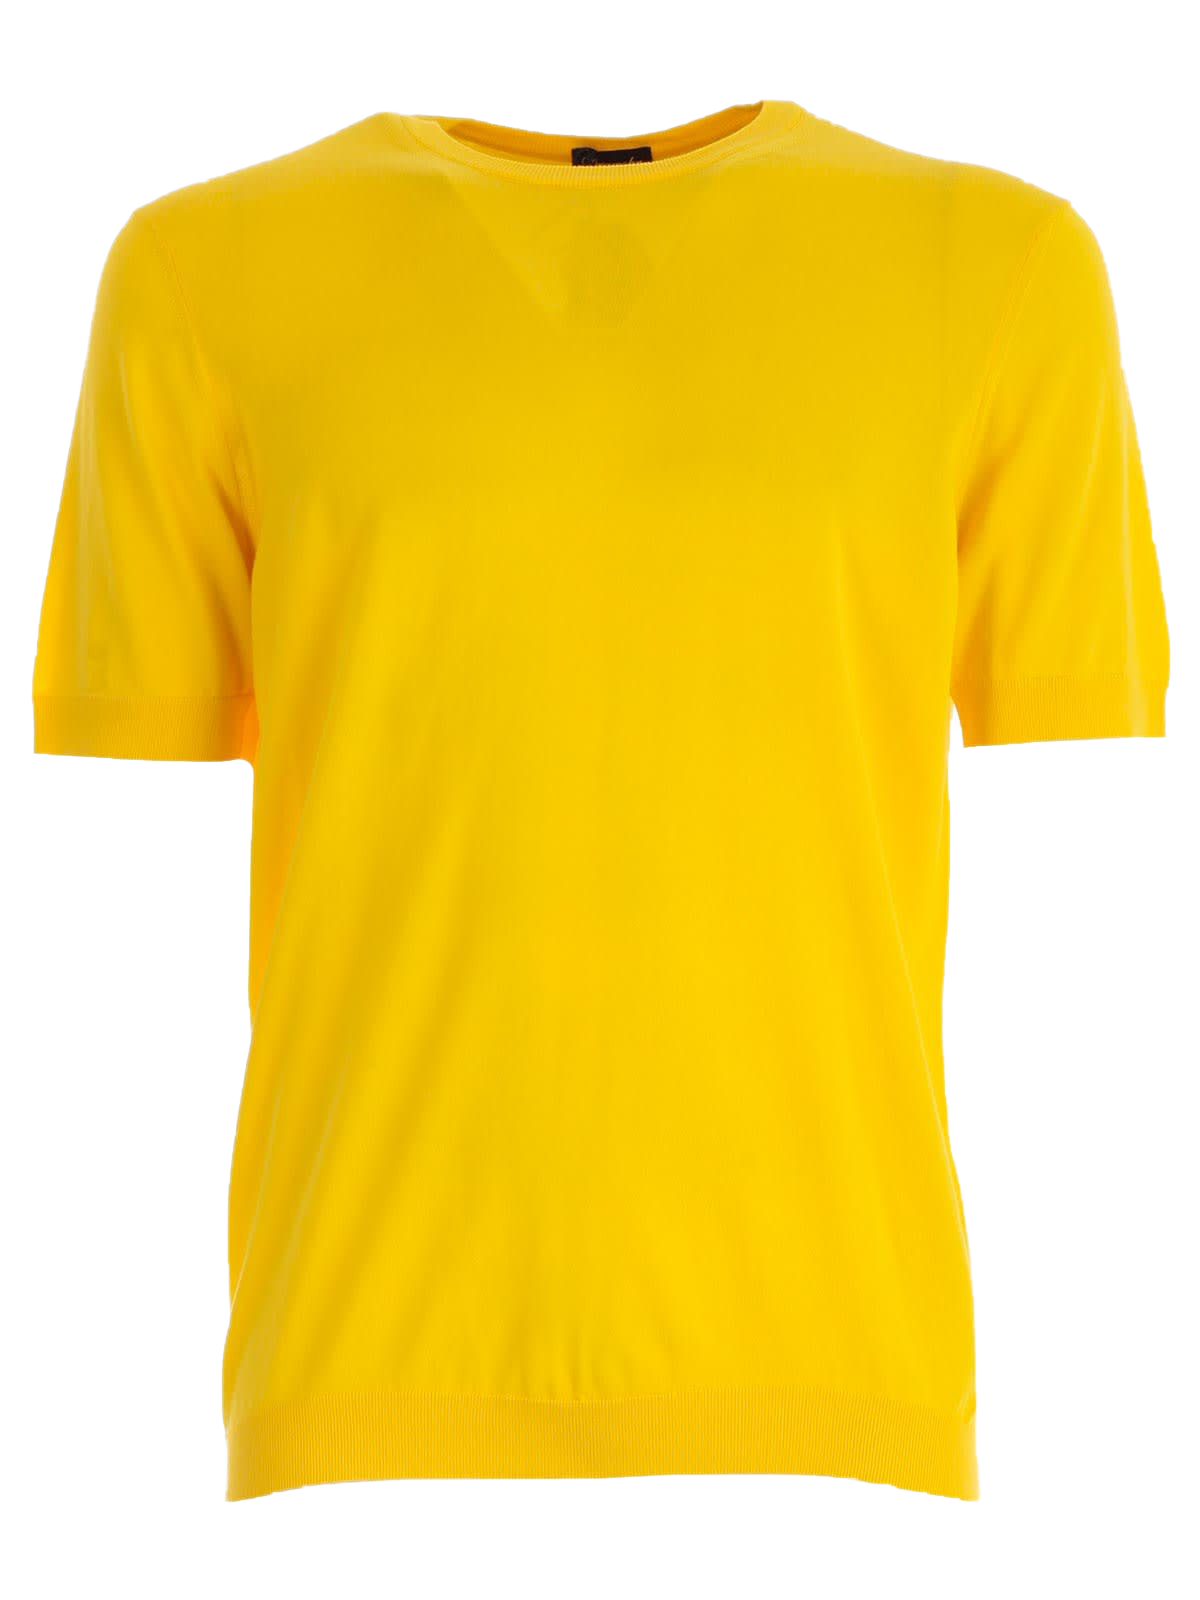 Plain Yellow T-Shirt PNG Image